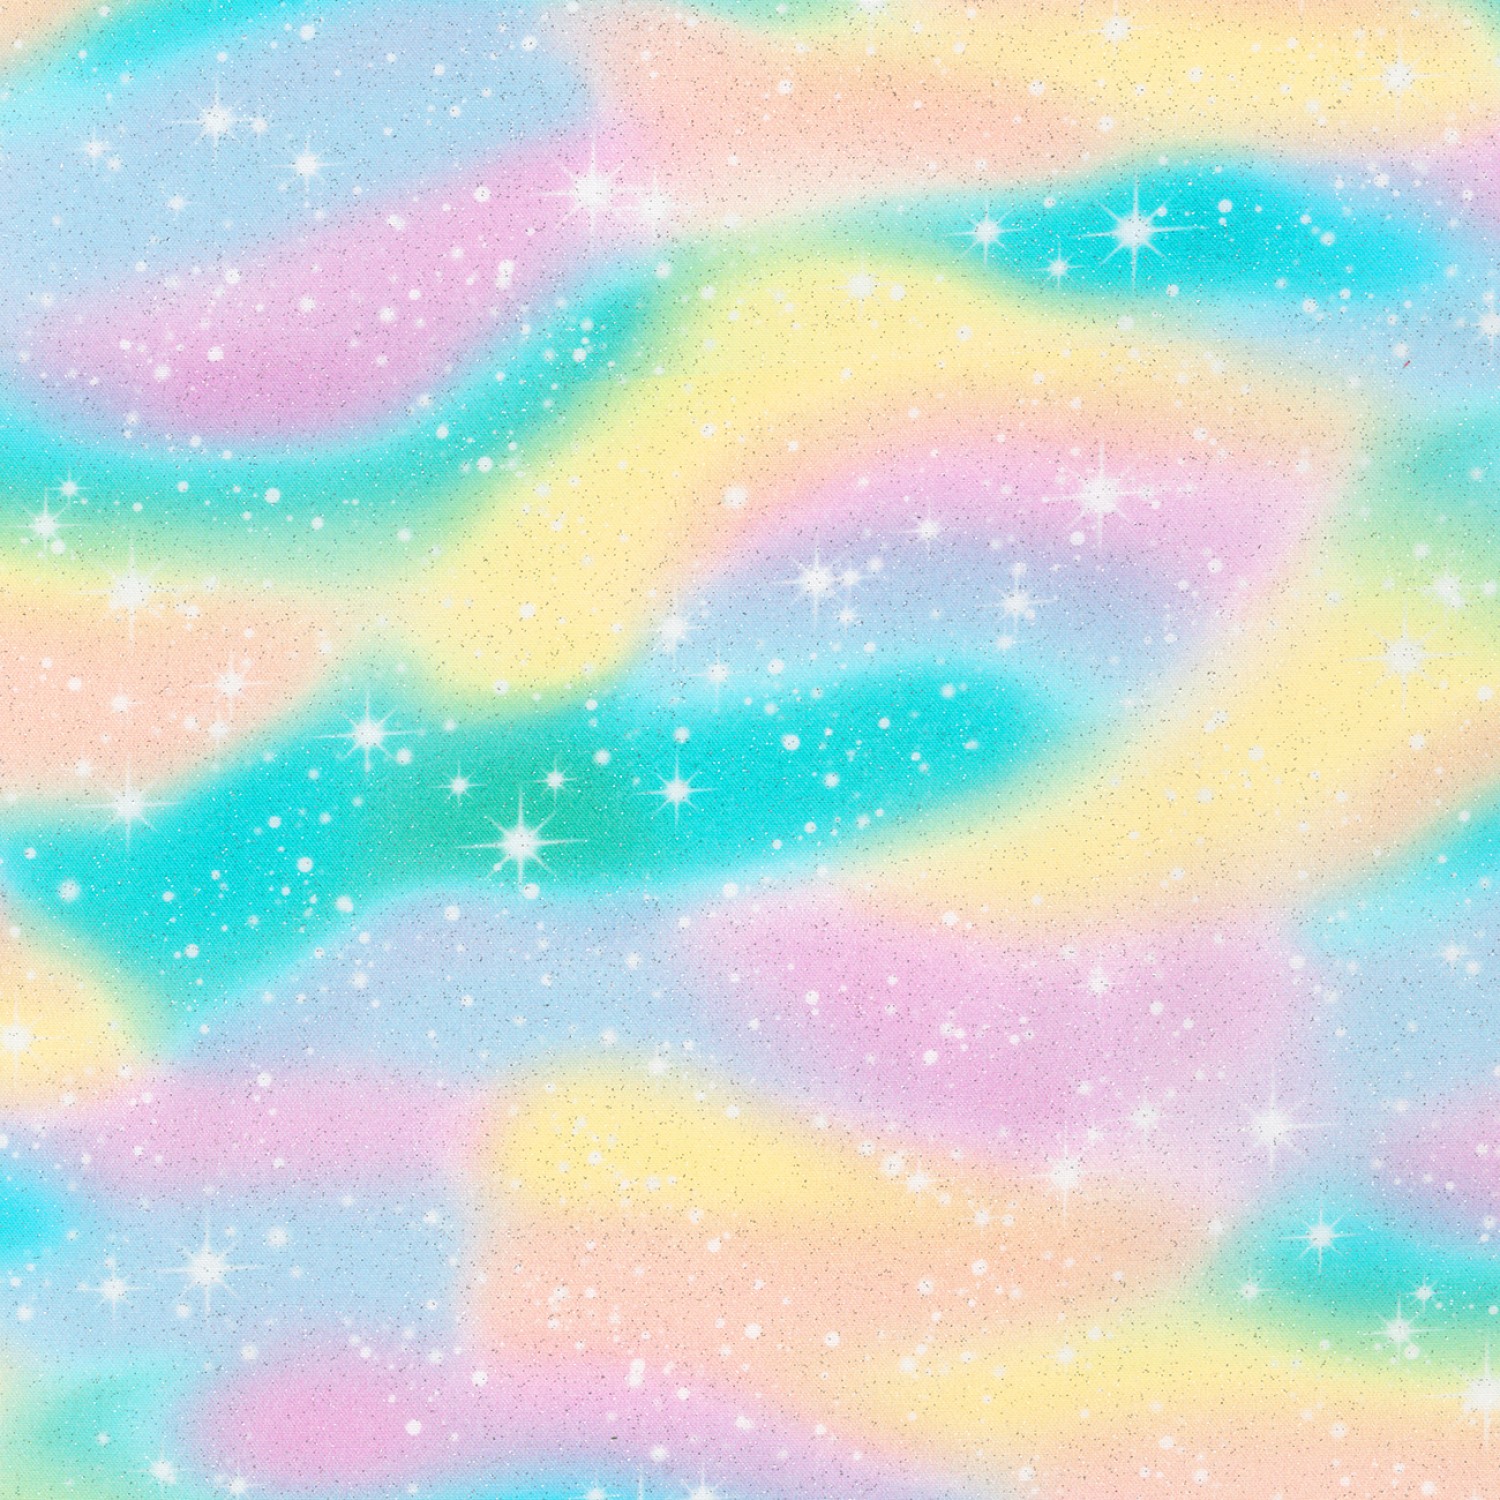 Pastel Galaxy Fabric With Glitter